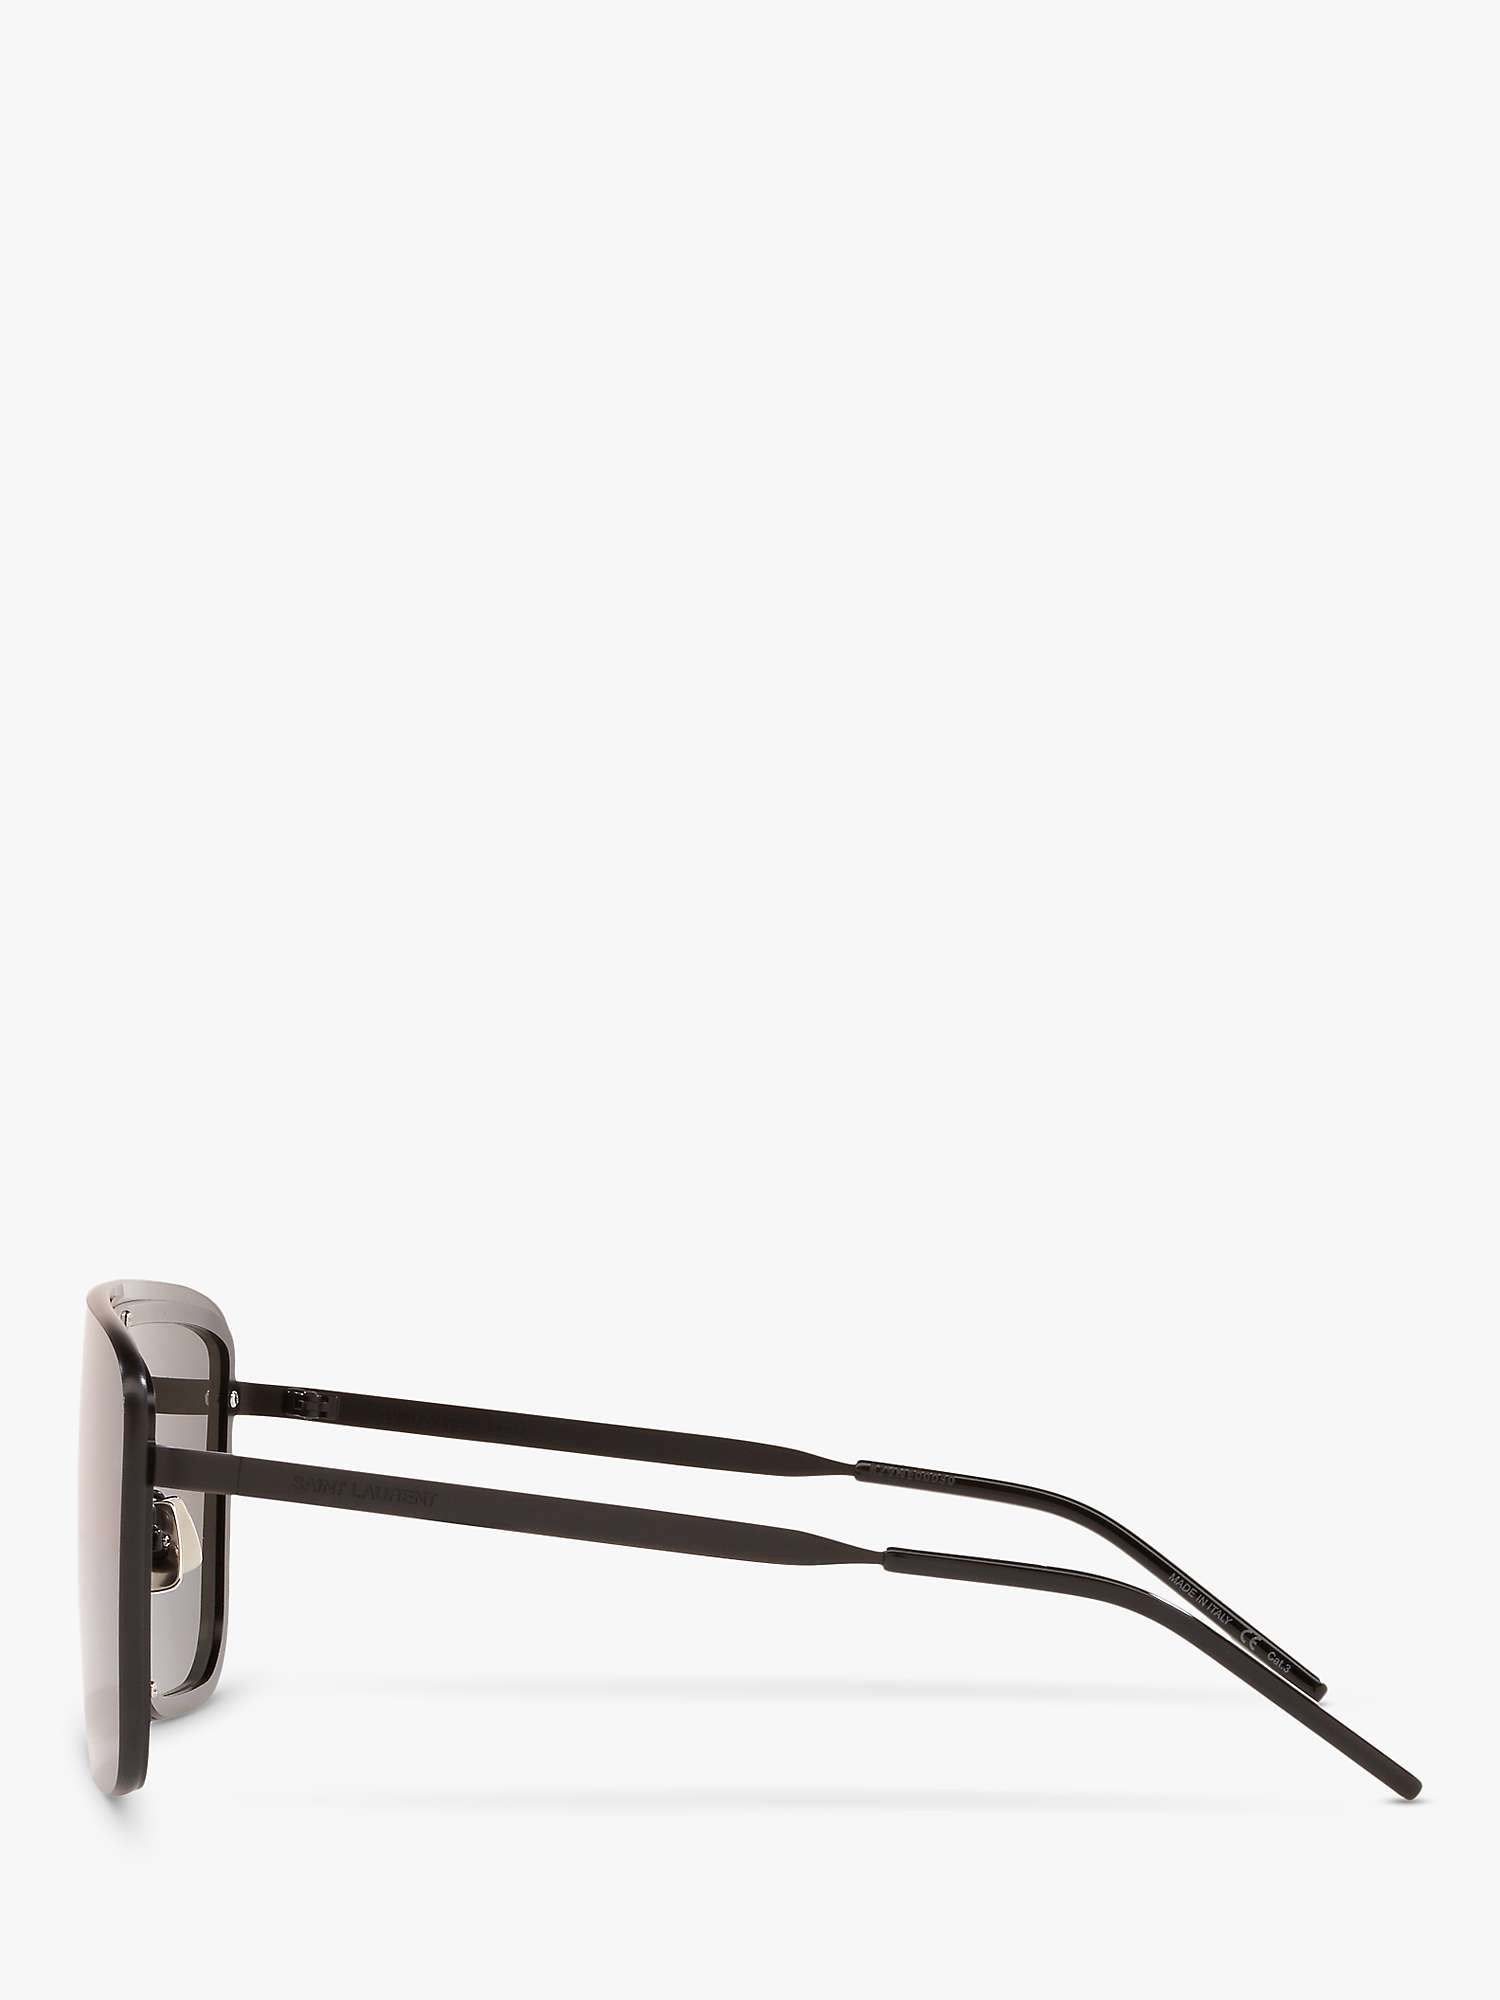 Buy Yves Saint Laurent SL 364 Unisex Rectangular Sunglasses Online at johnlewis.com